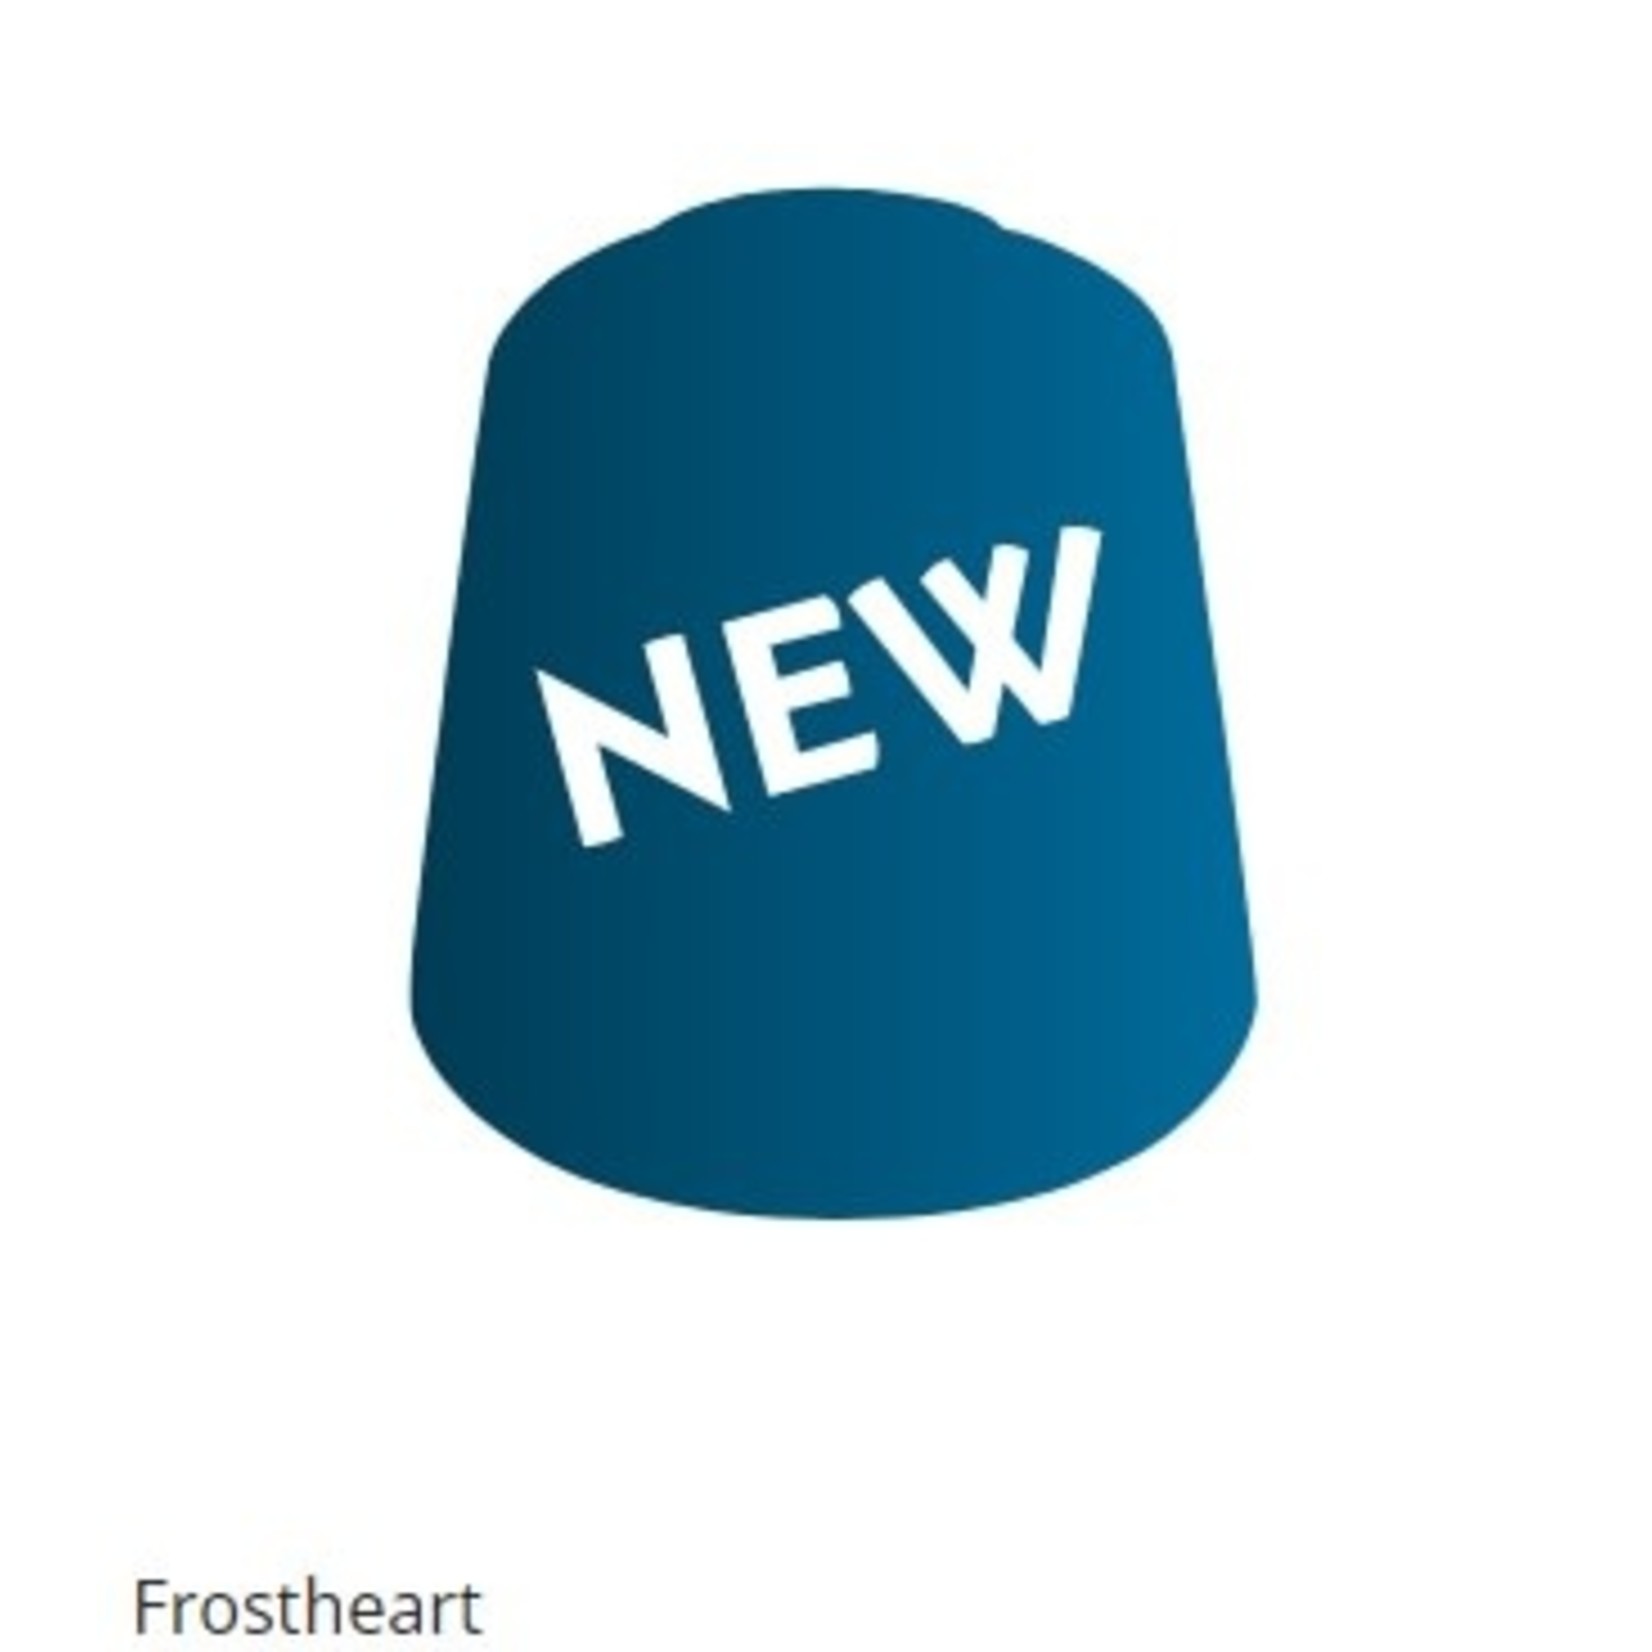 29-57 CONTRAST Frostheart (18ml)